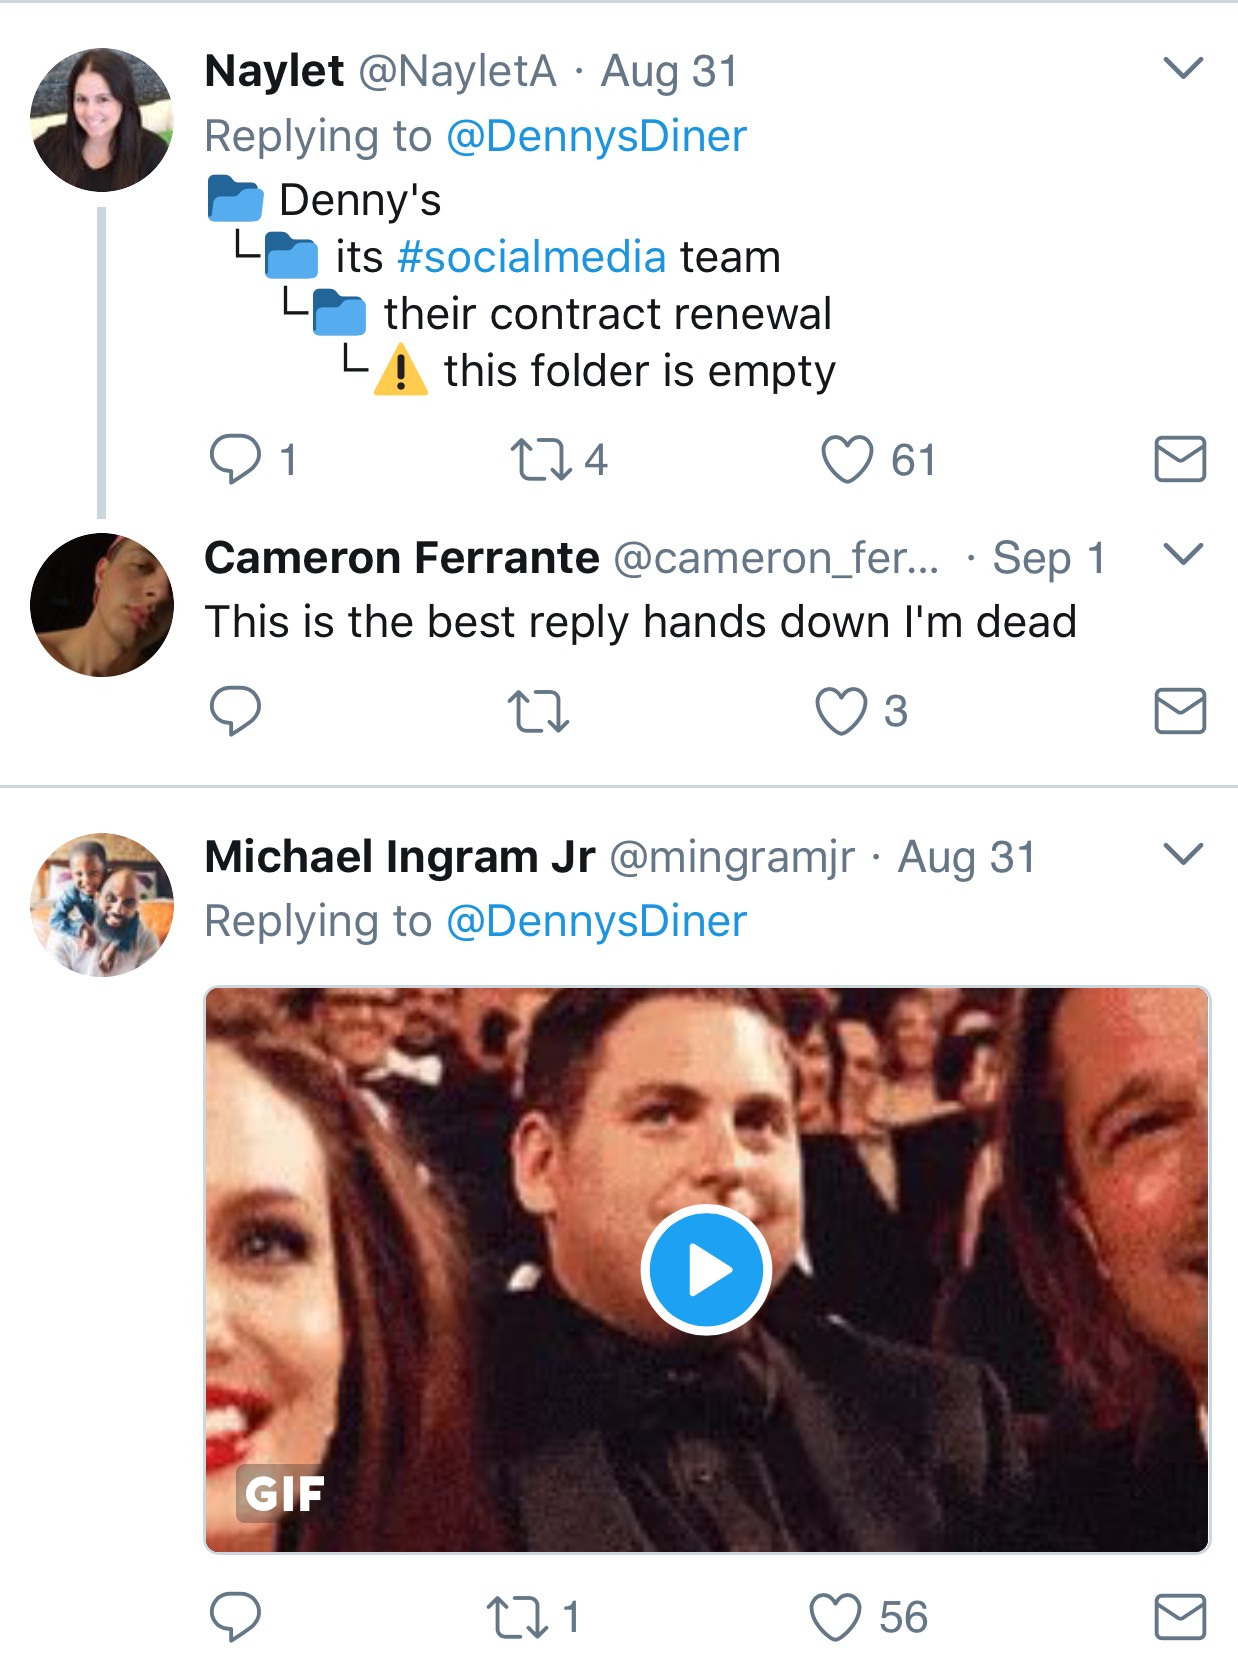 Tweet joking that Denny's social media contract won't be renewed